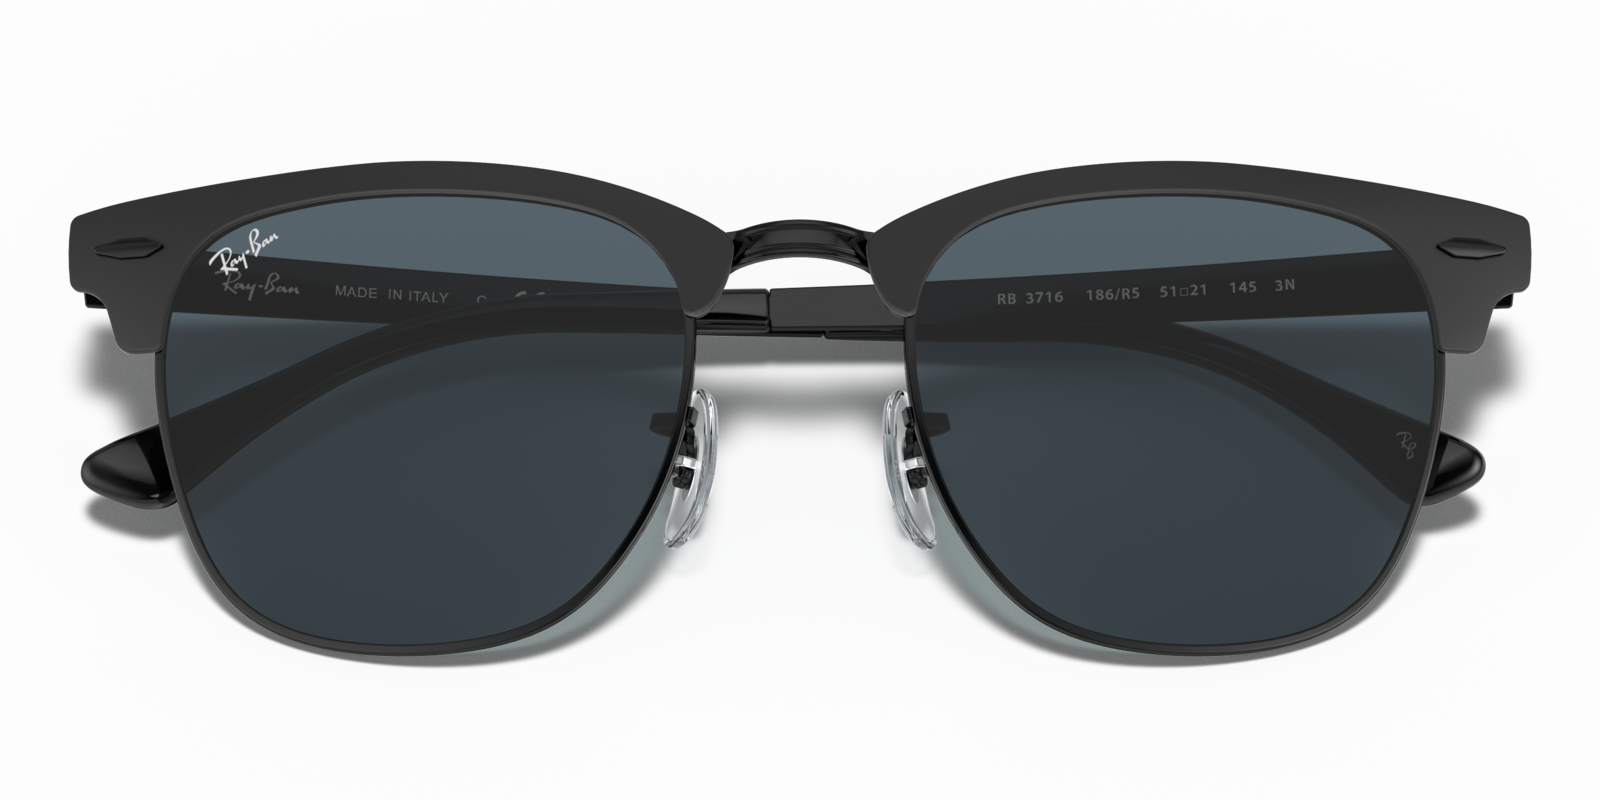 Солнцезащитные очки Ray-Ban  Ray-Ban RB 3716 186/R5